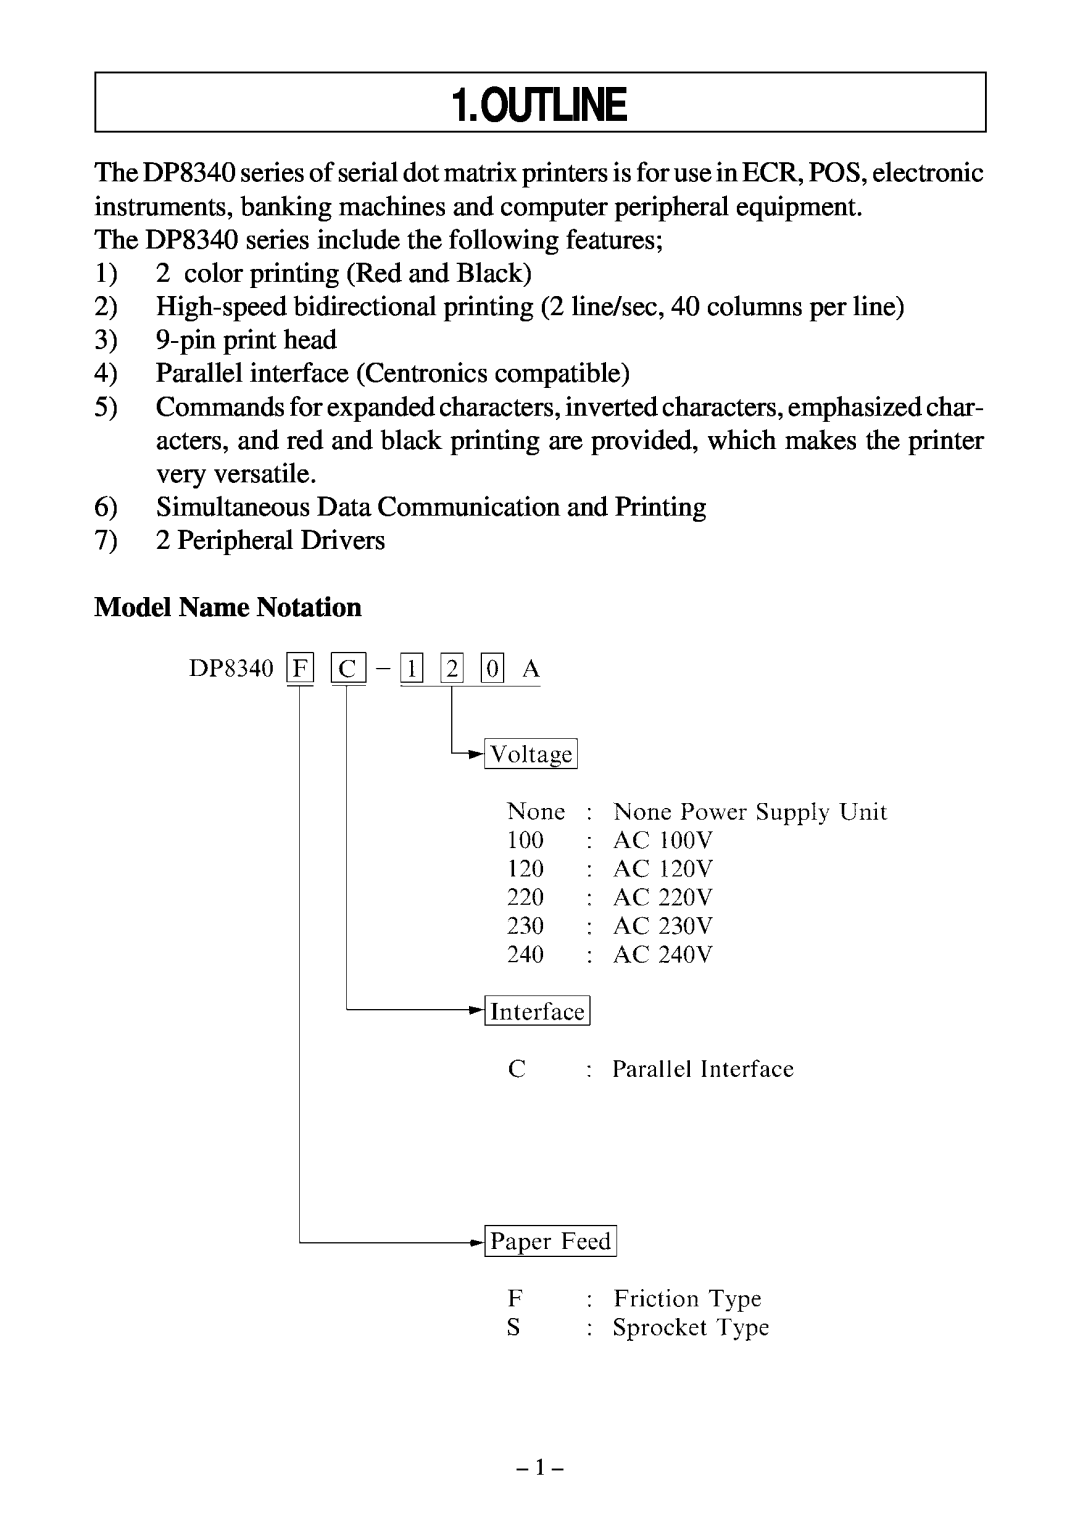 Star Micronics DP8340 user manual Outline, Model Name Notation 